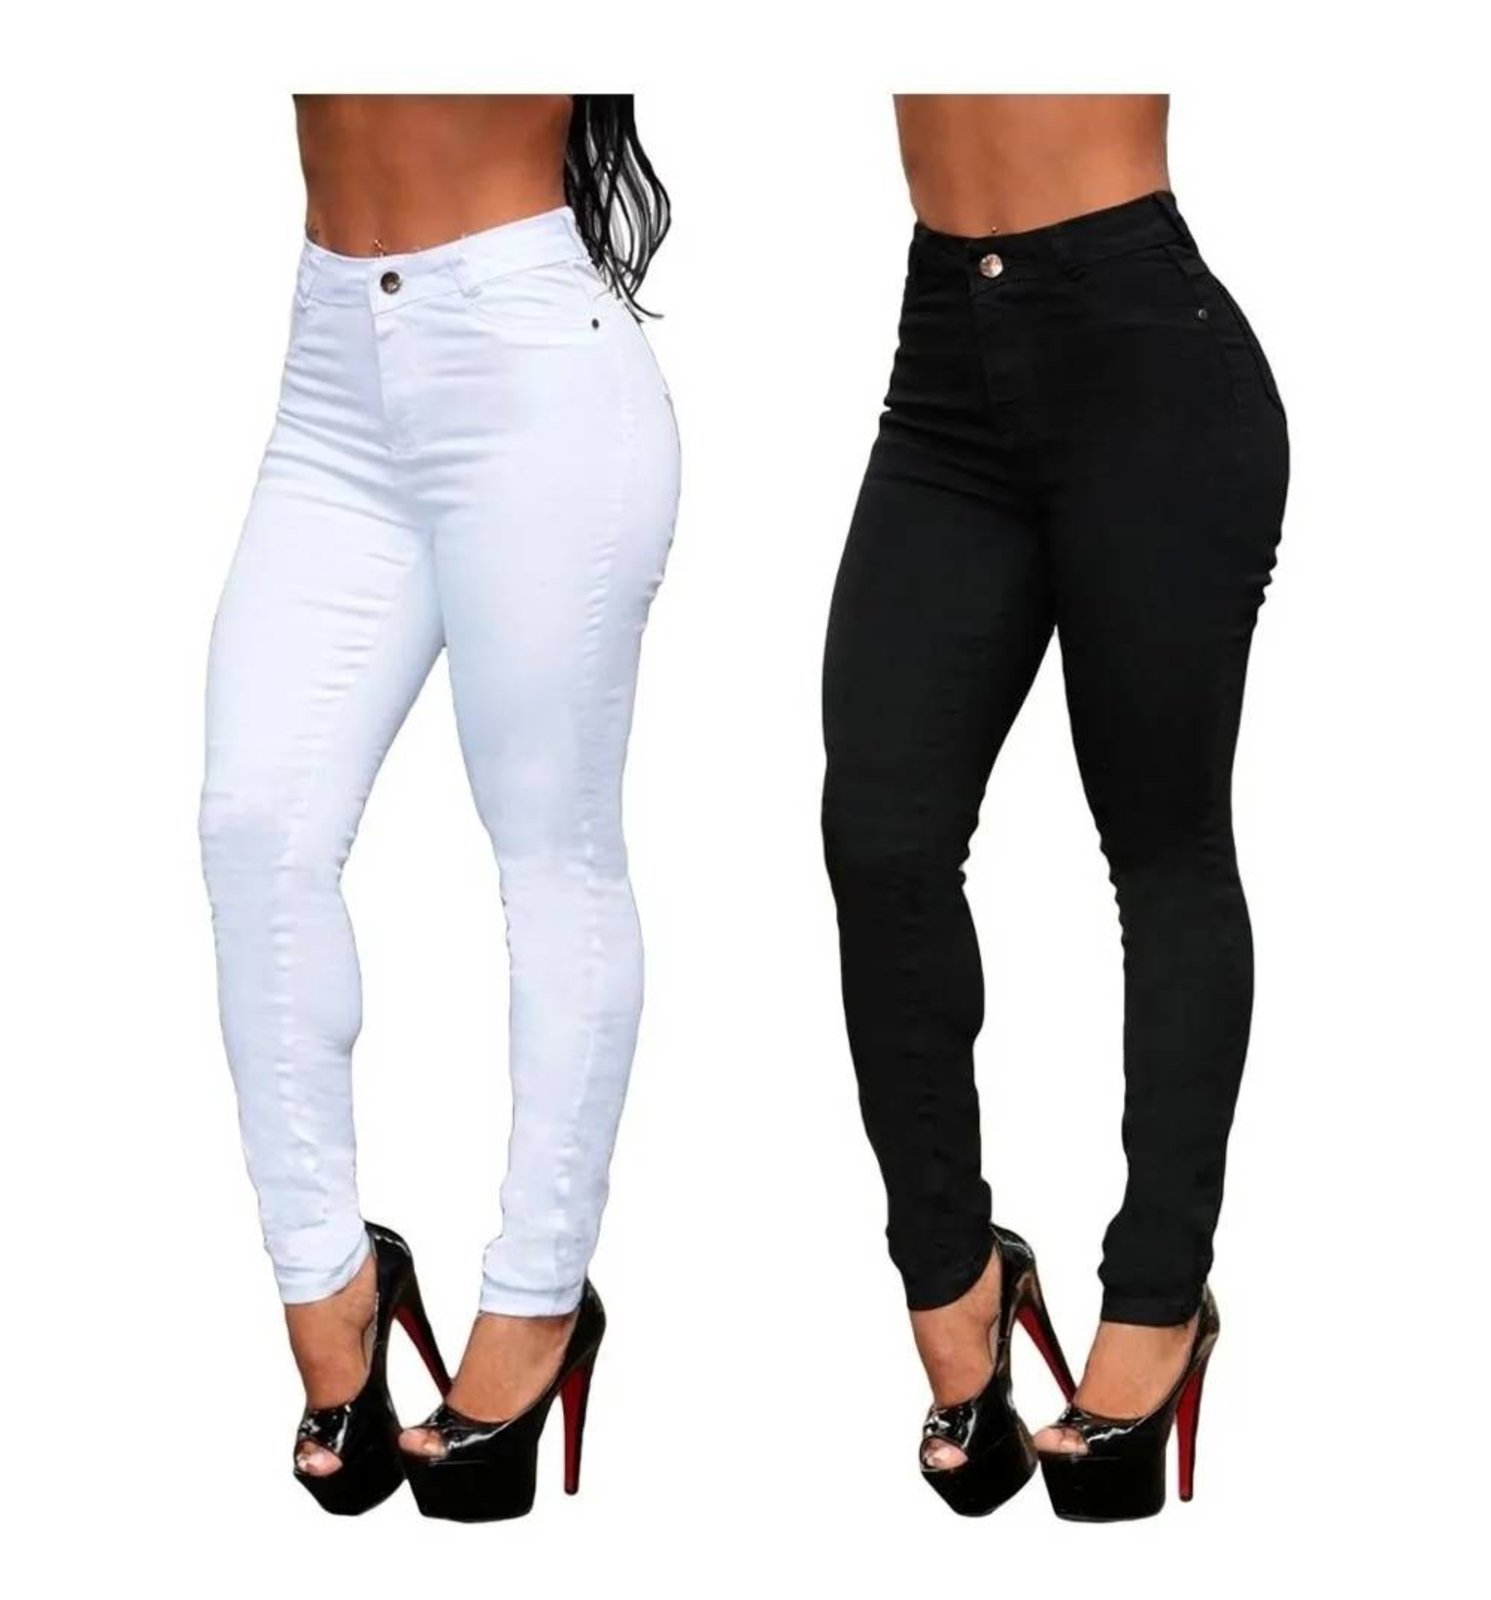 calça jeans cintura alta preta feminina